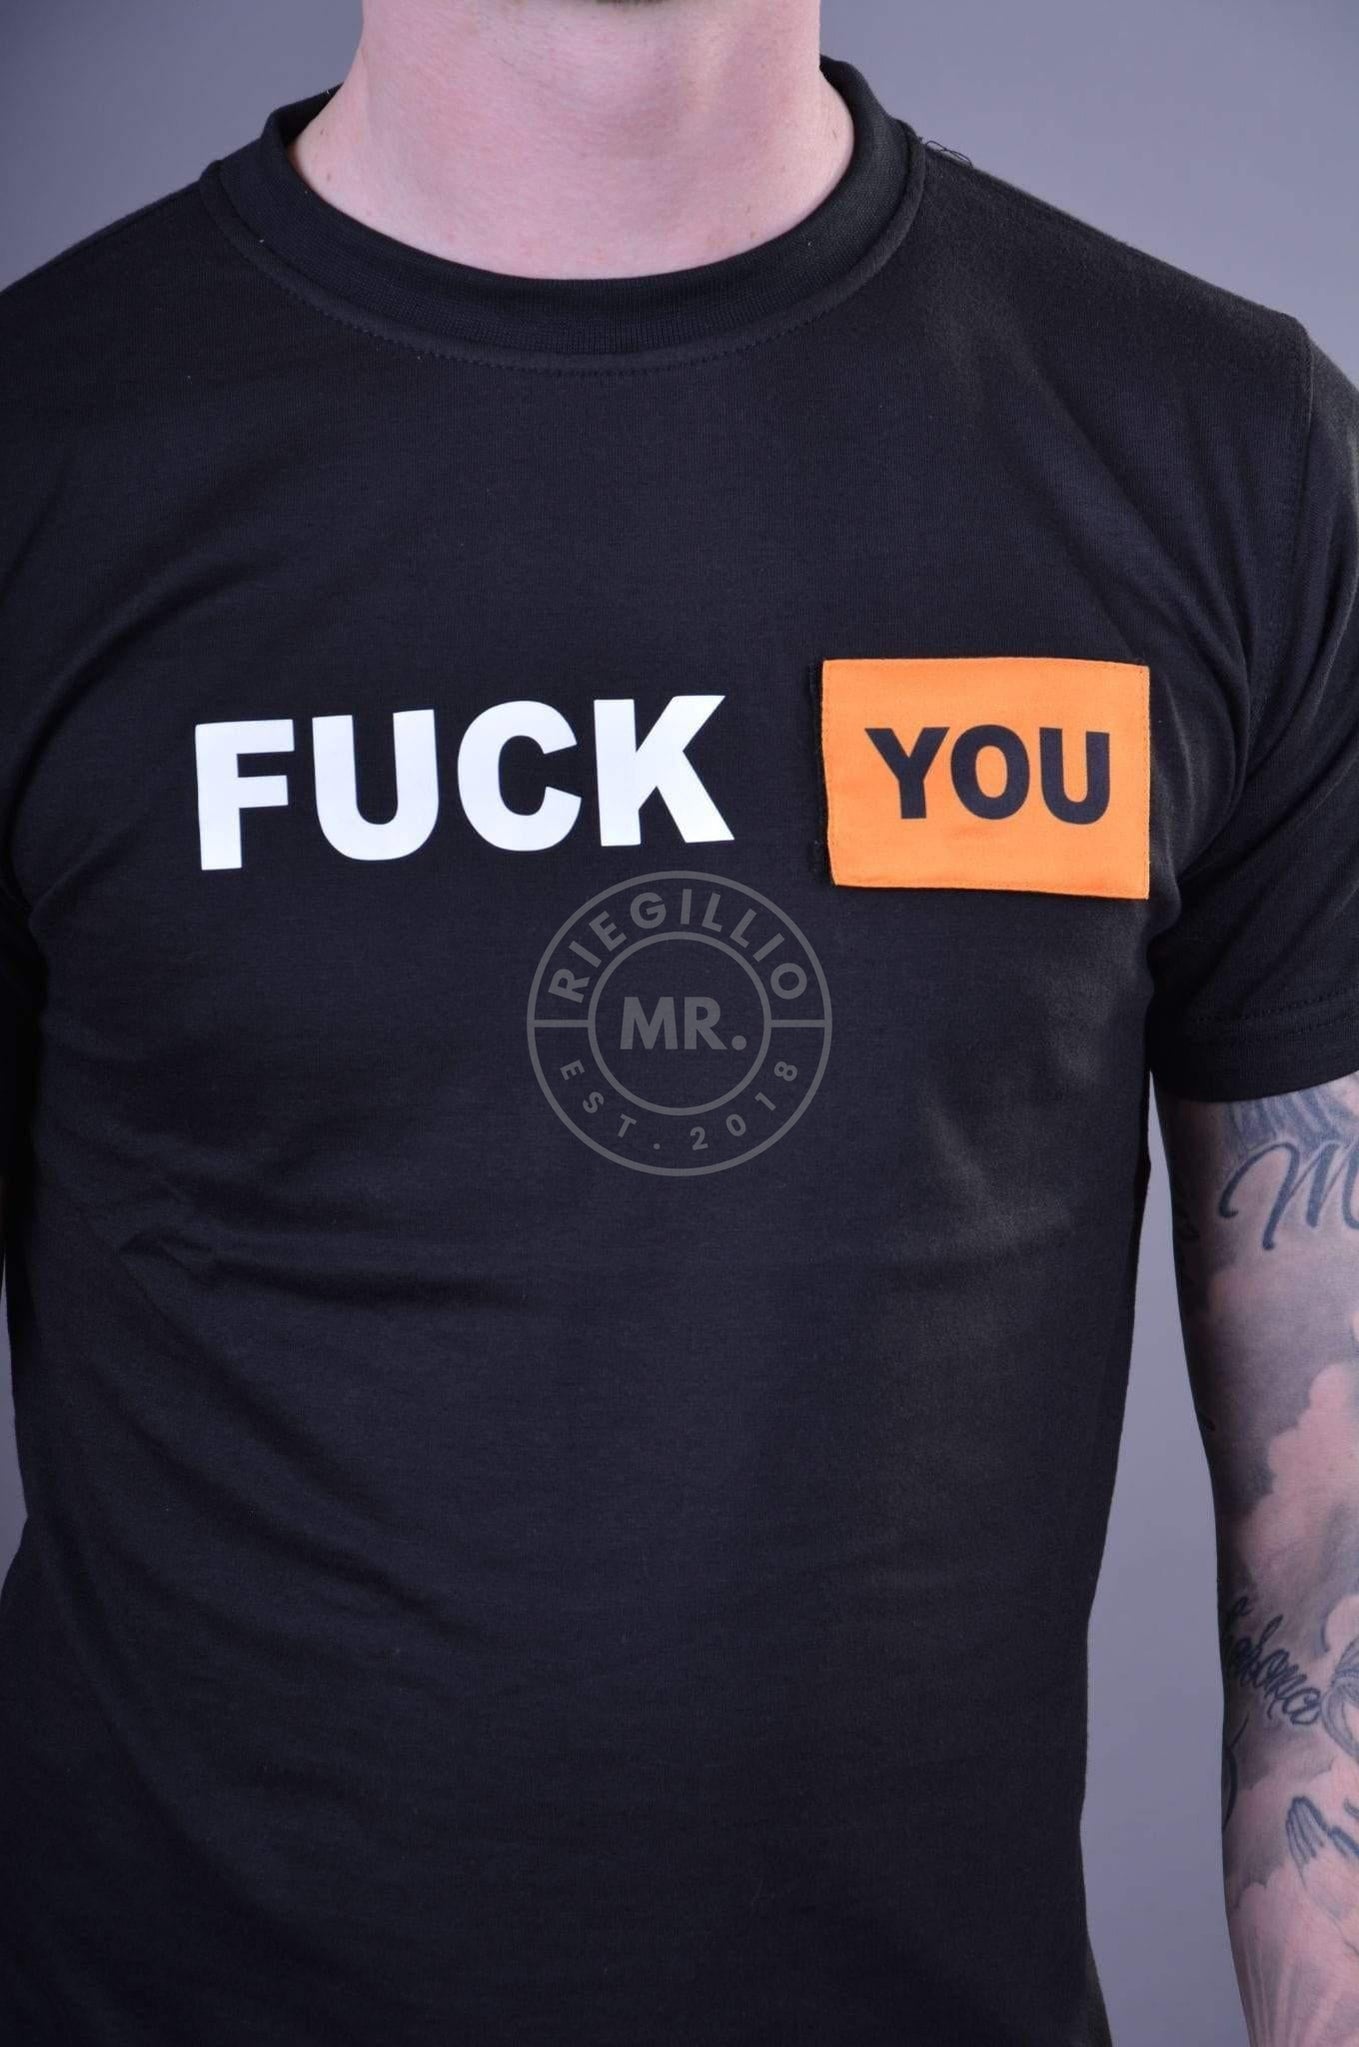 Fuck ME/YOU T-Shirt-at MR. Riegillio